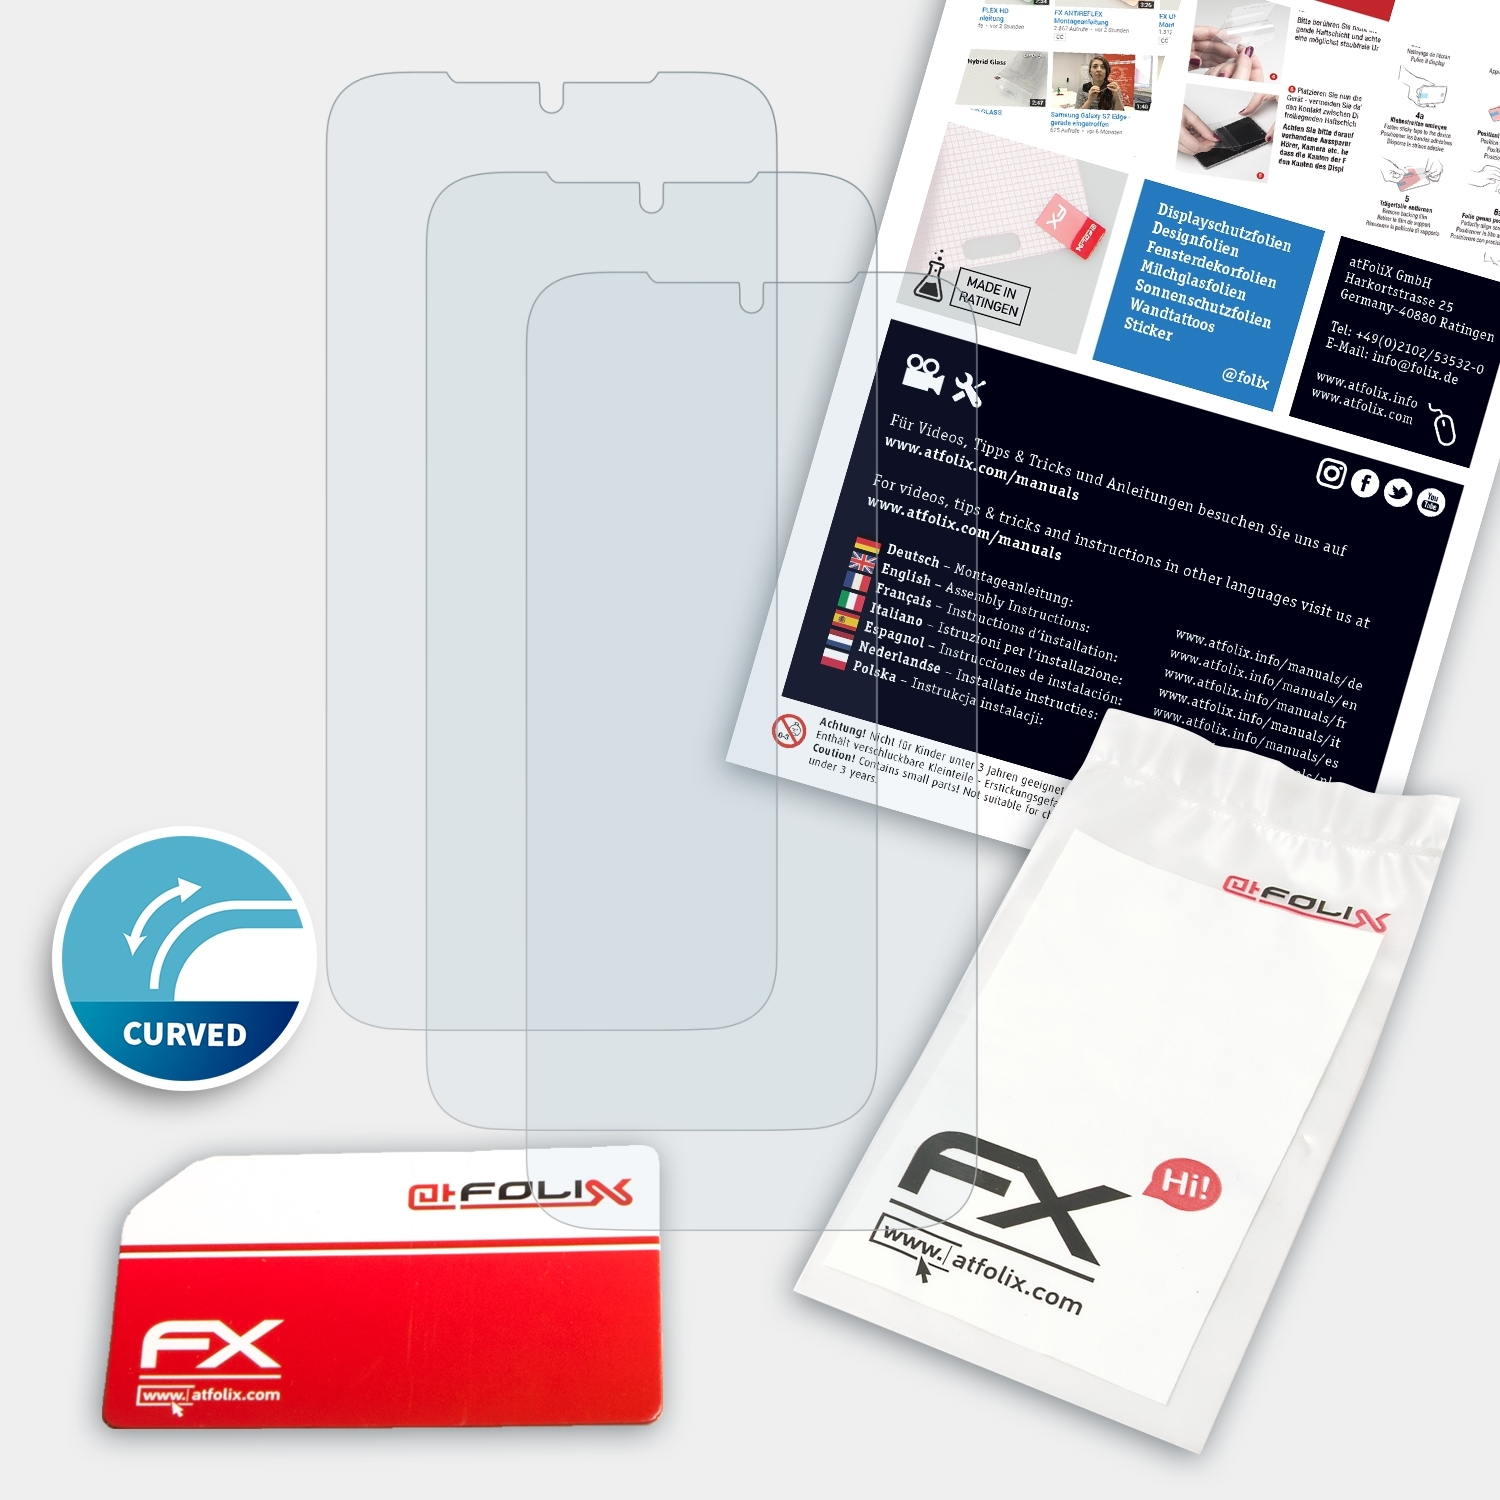 ATFOLIX 3x FX-ActiFleX G8 Displayschutz(für Plus) Motorola Moto